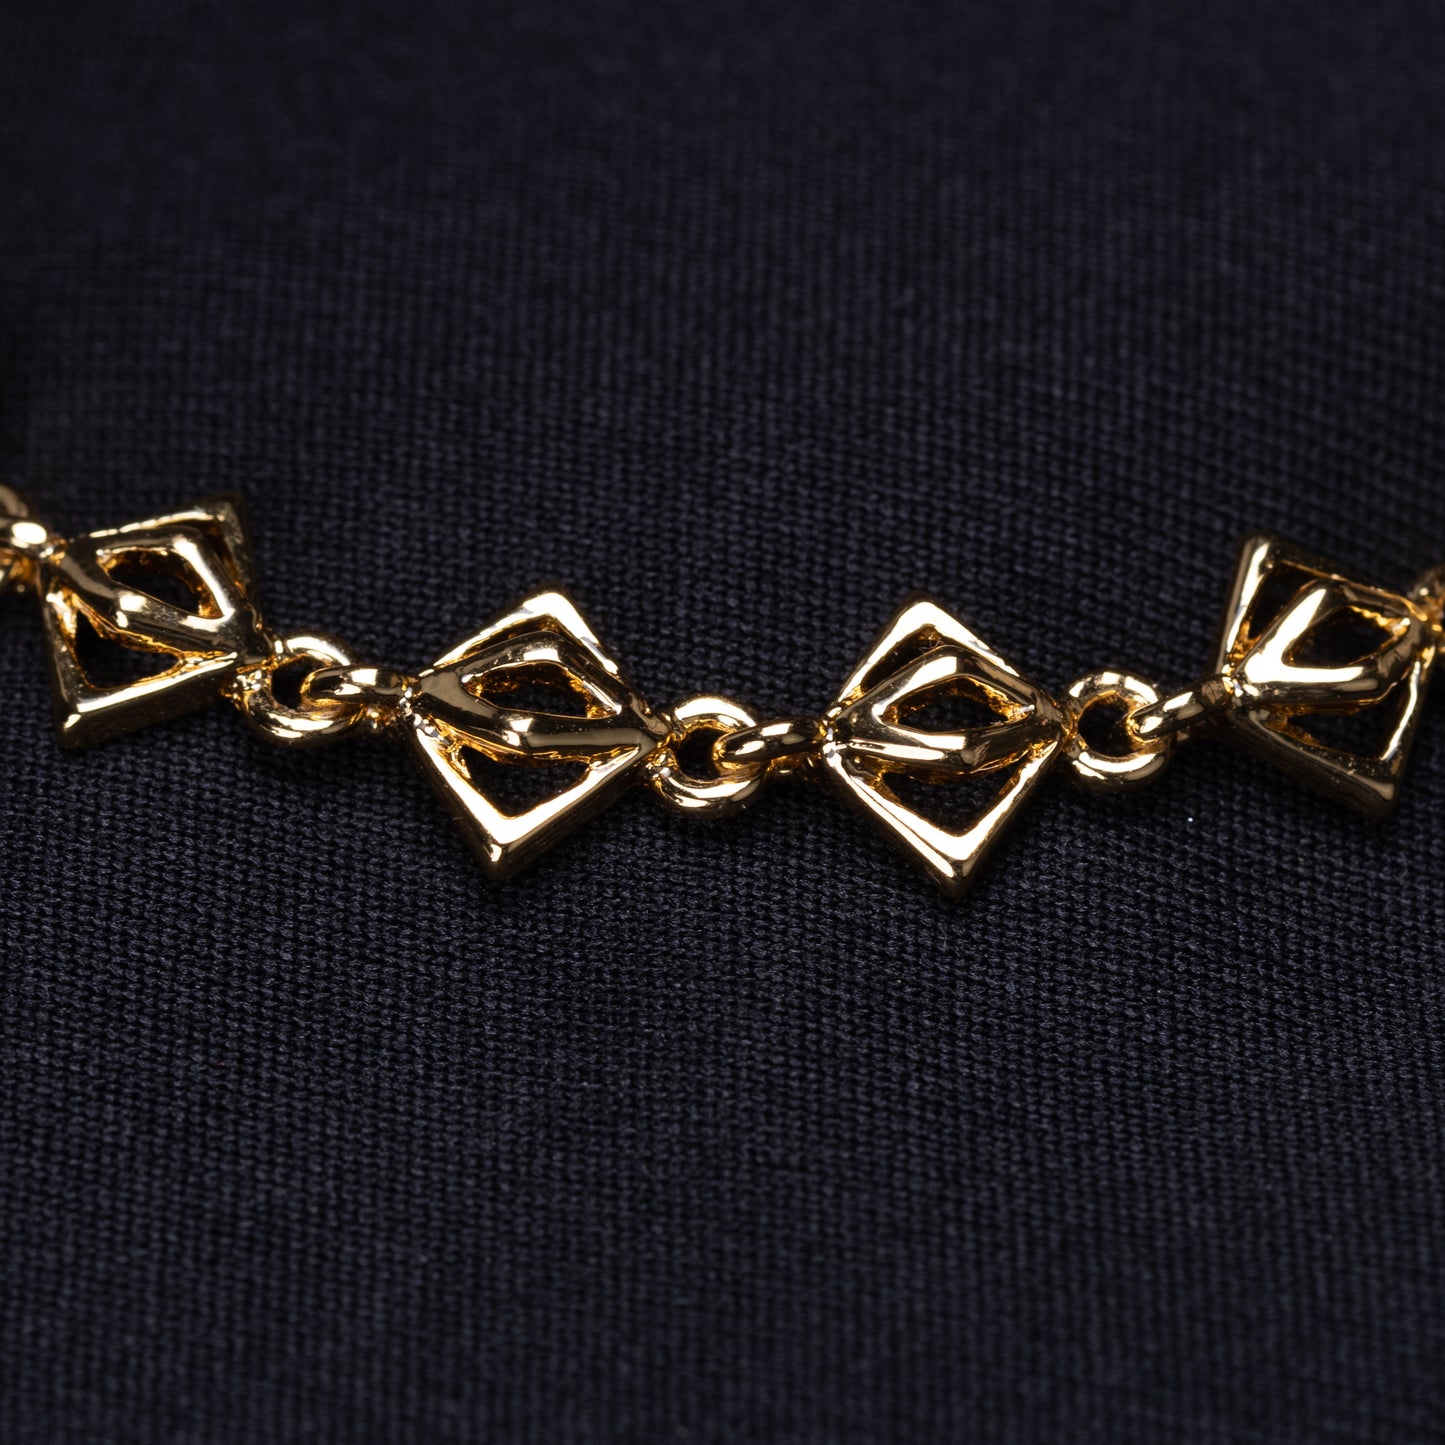 24 ct Gold plated geometric Design Bracelet for women